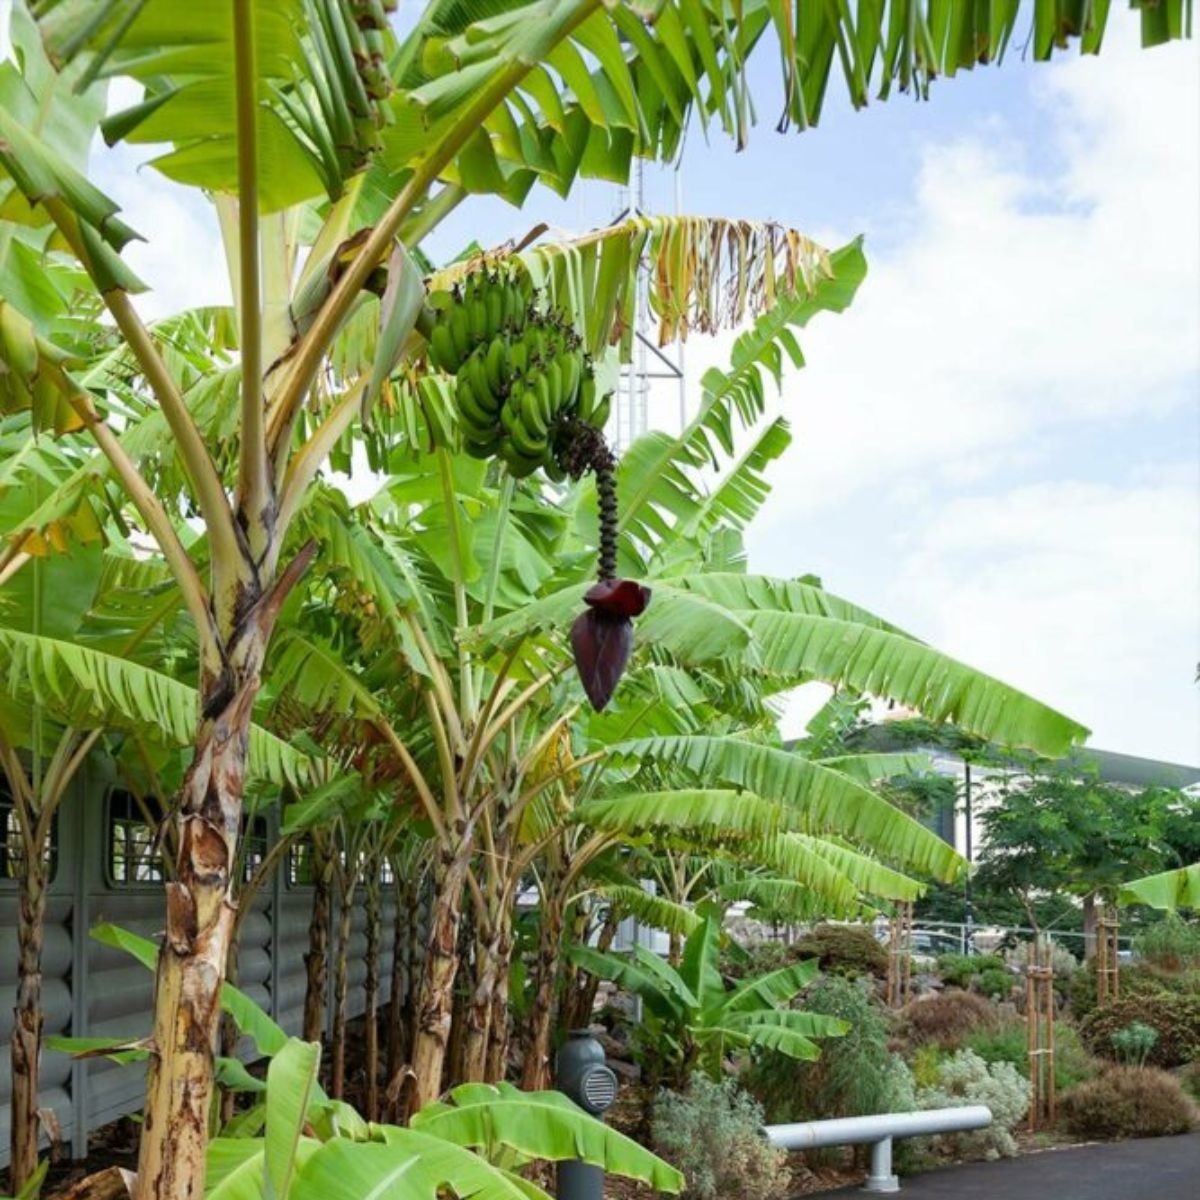 Banana garden featured